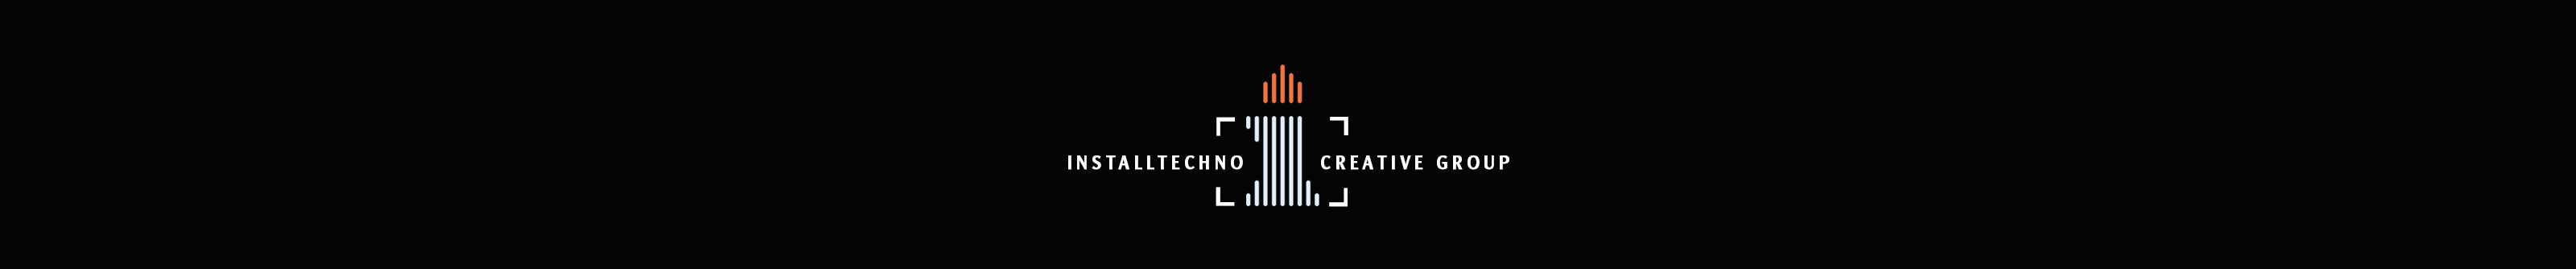 Banner de perfil de Installtechno Creative Group